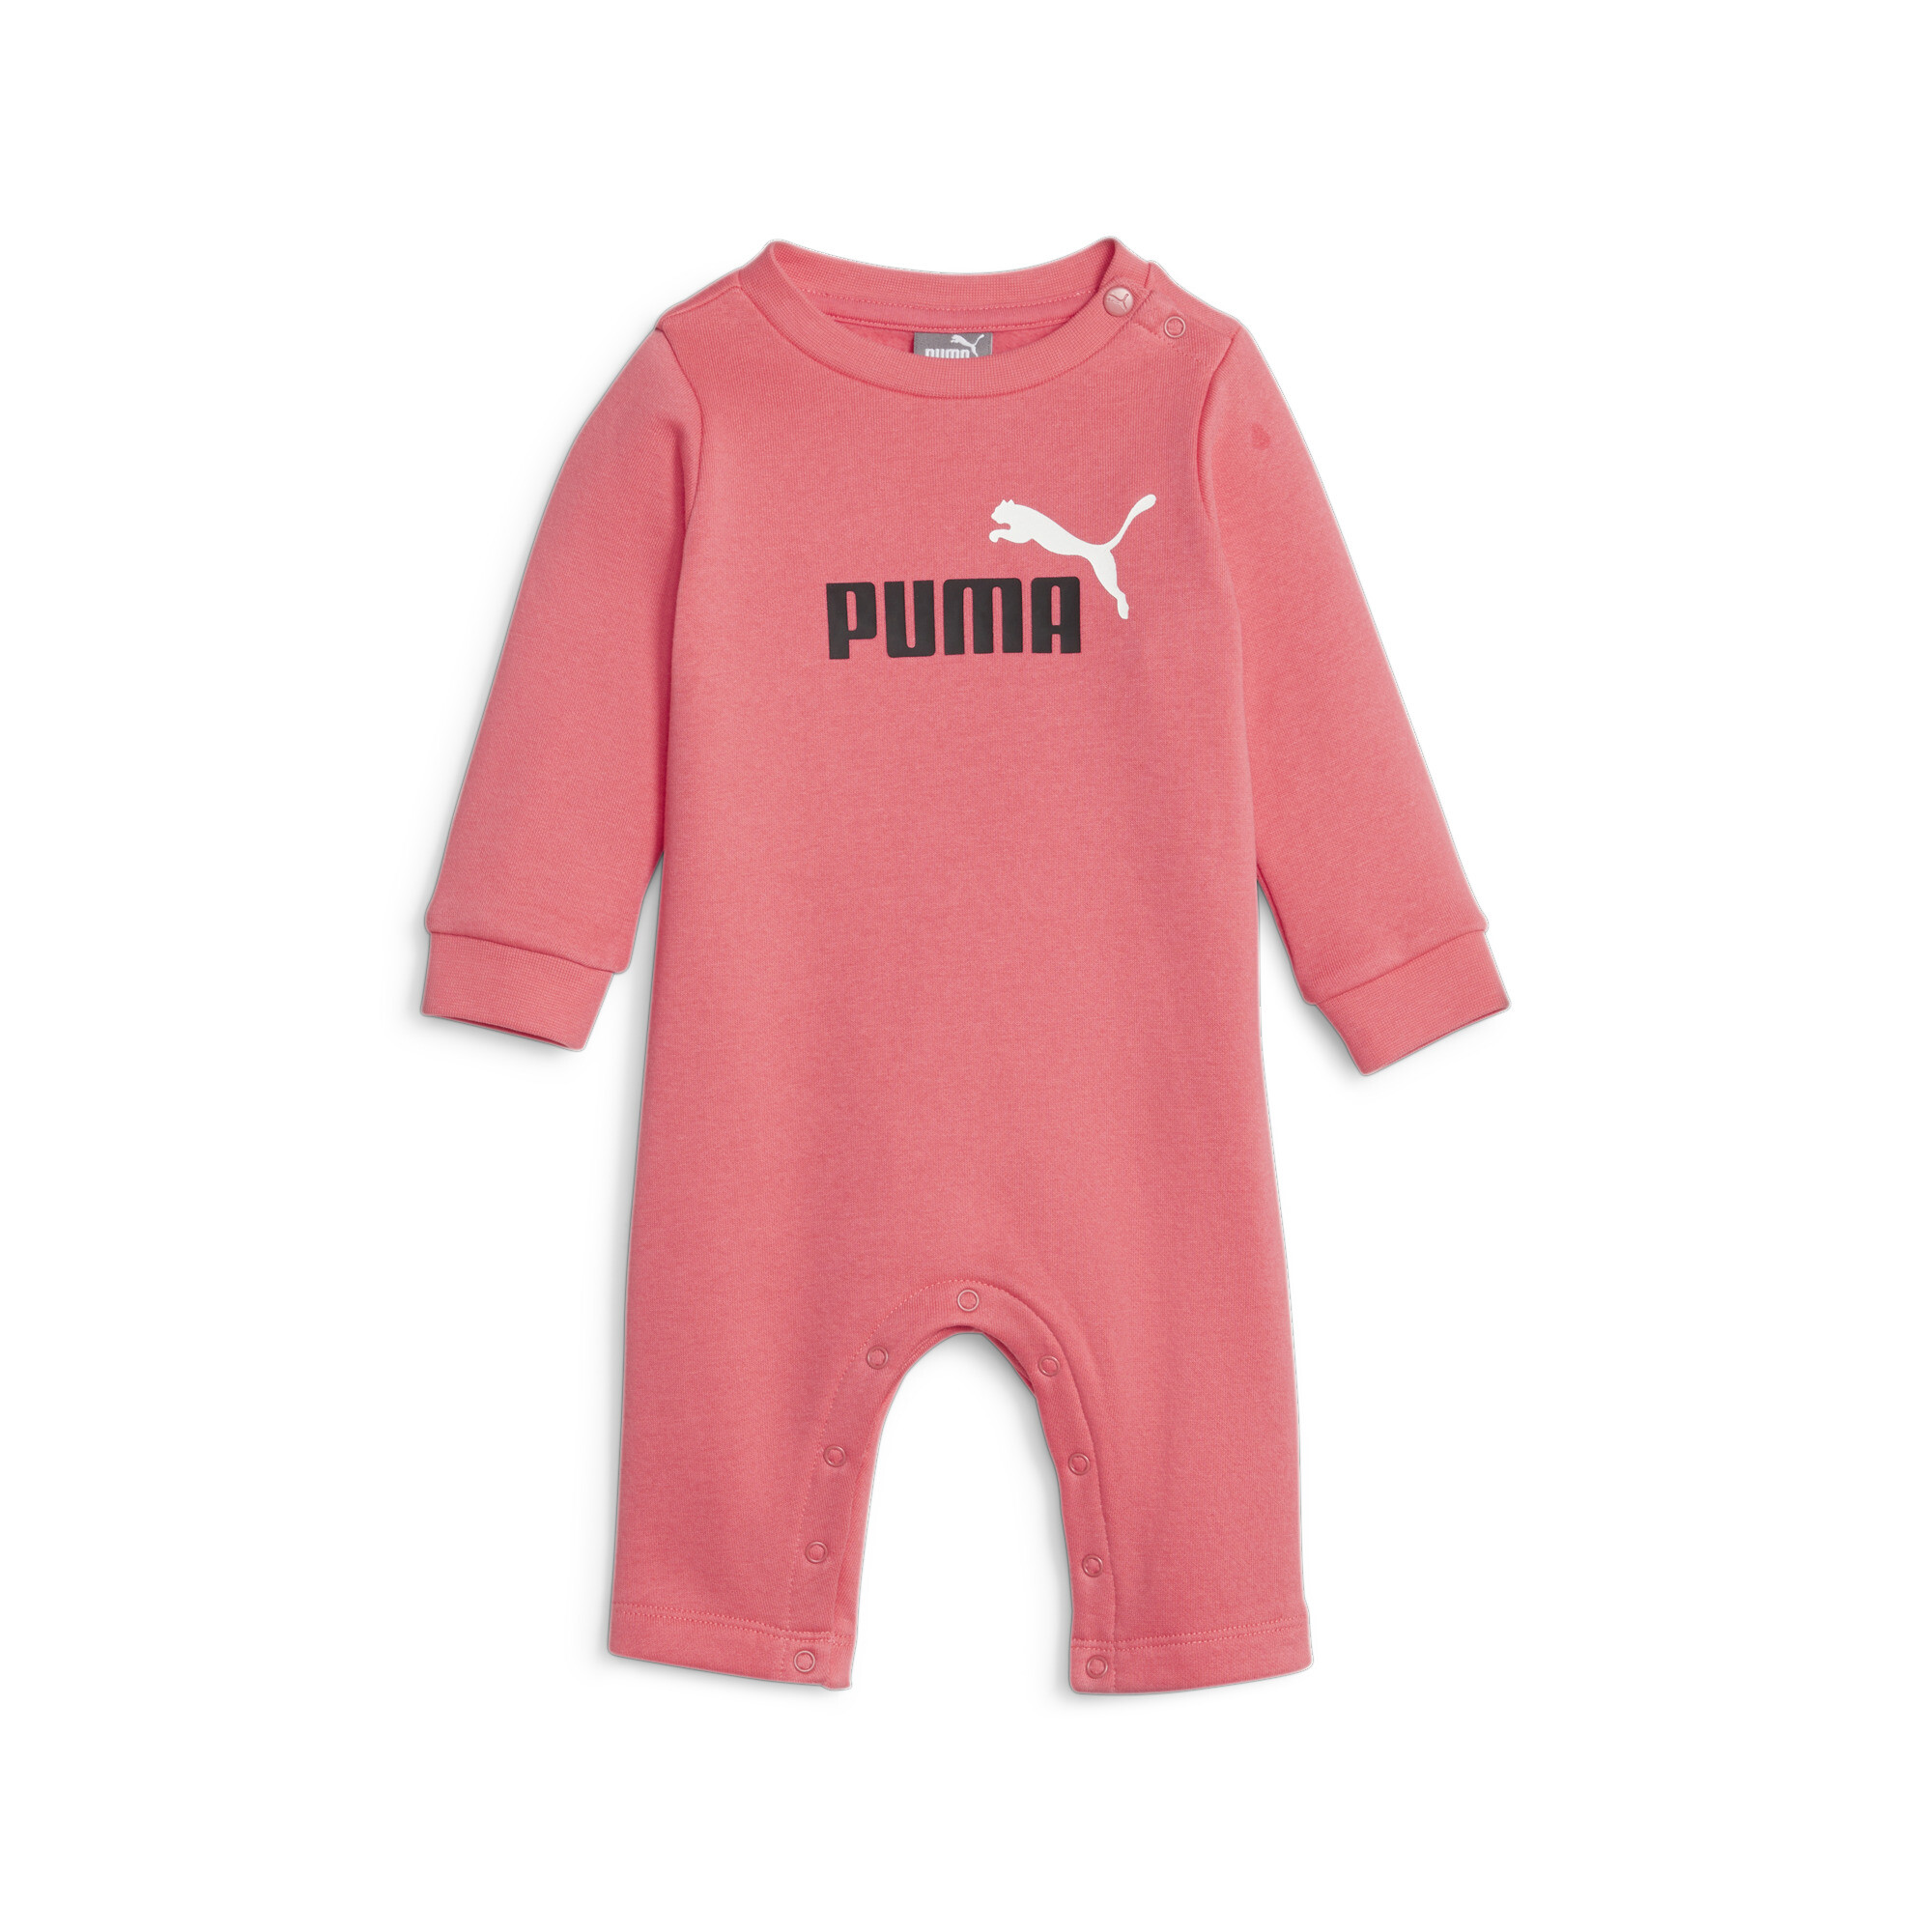 Puma Minicats Newborn Coverall Babies, Pink, Size 4-6M, Clothing